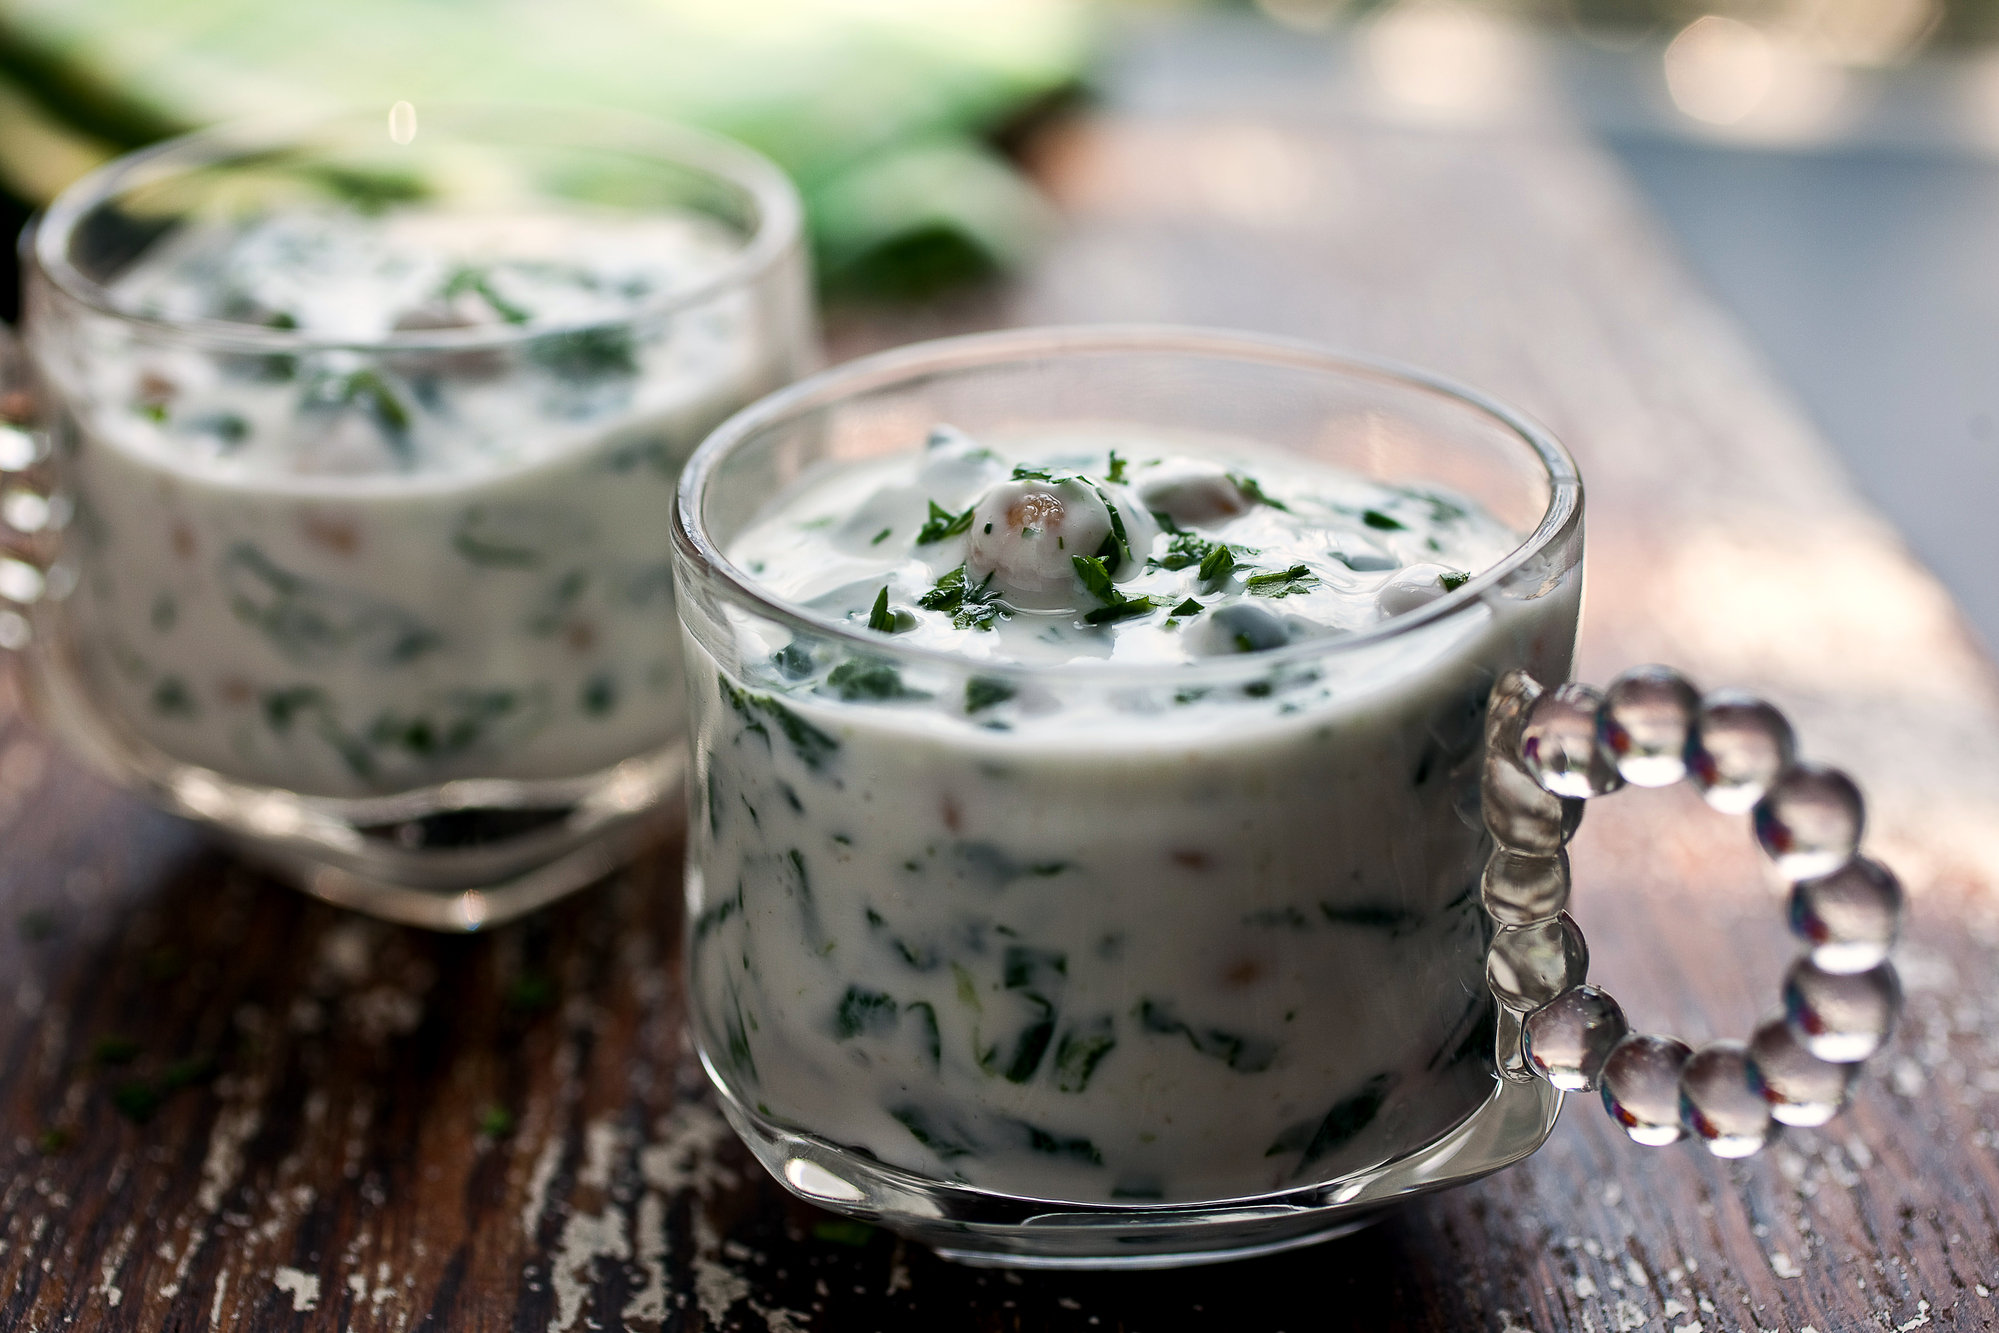 Cucumber yogurt soup_PC nytimes.com